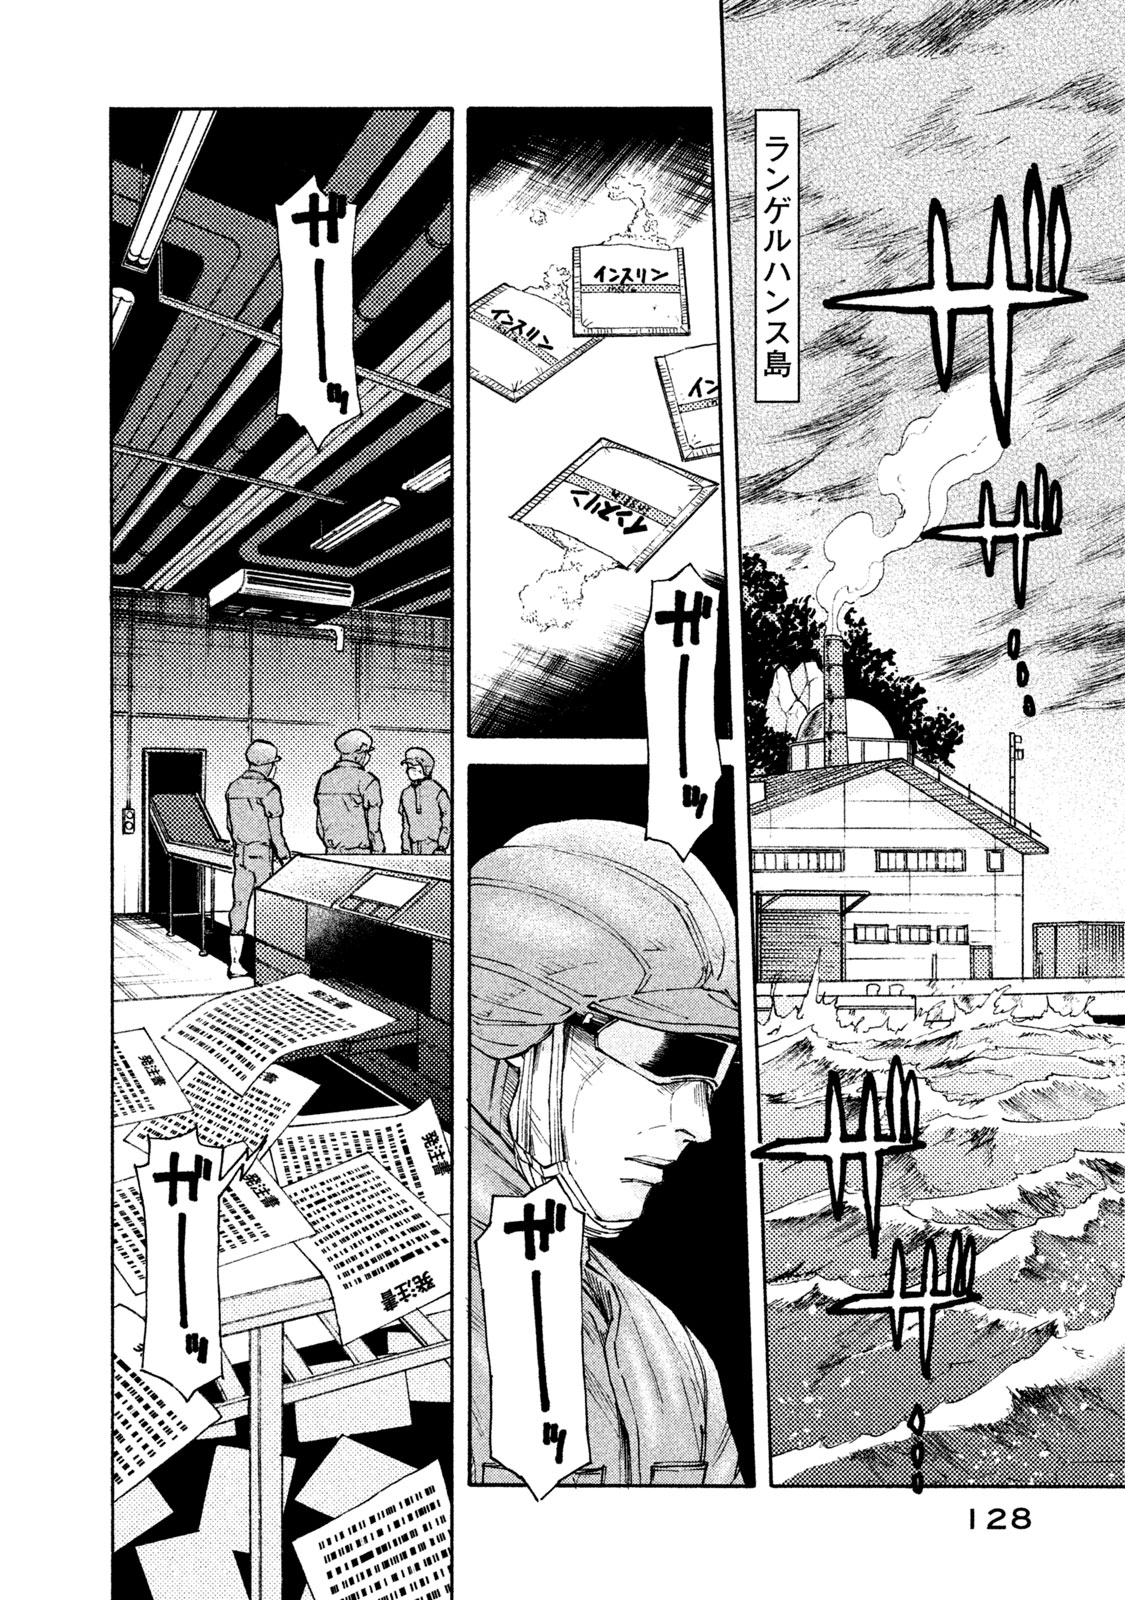 Hataraku Saibou BLACK - Chapter 24 - Page 2